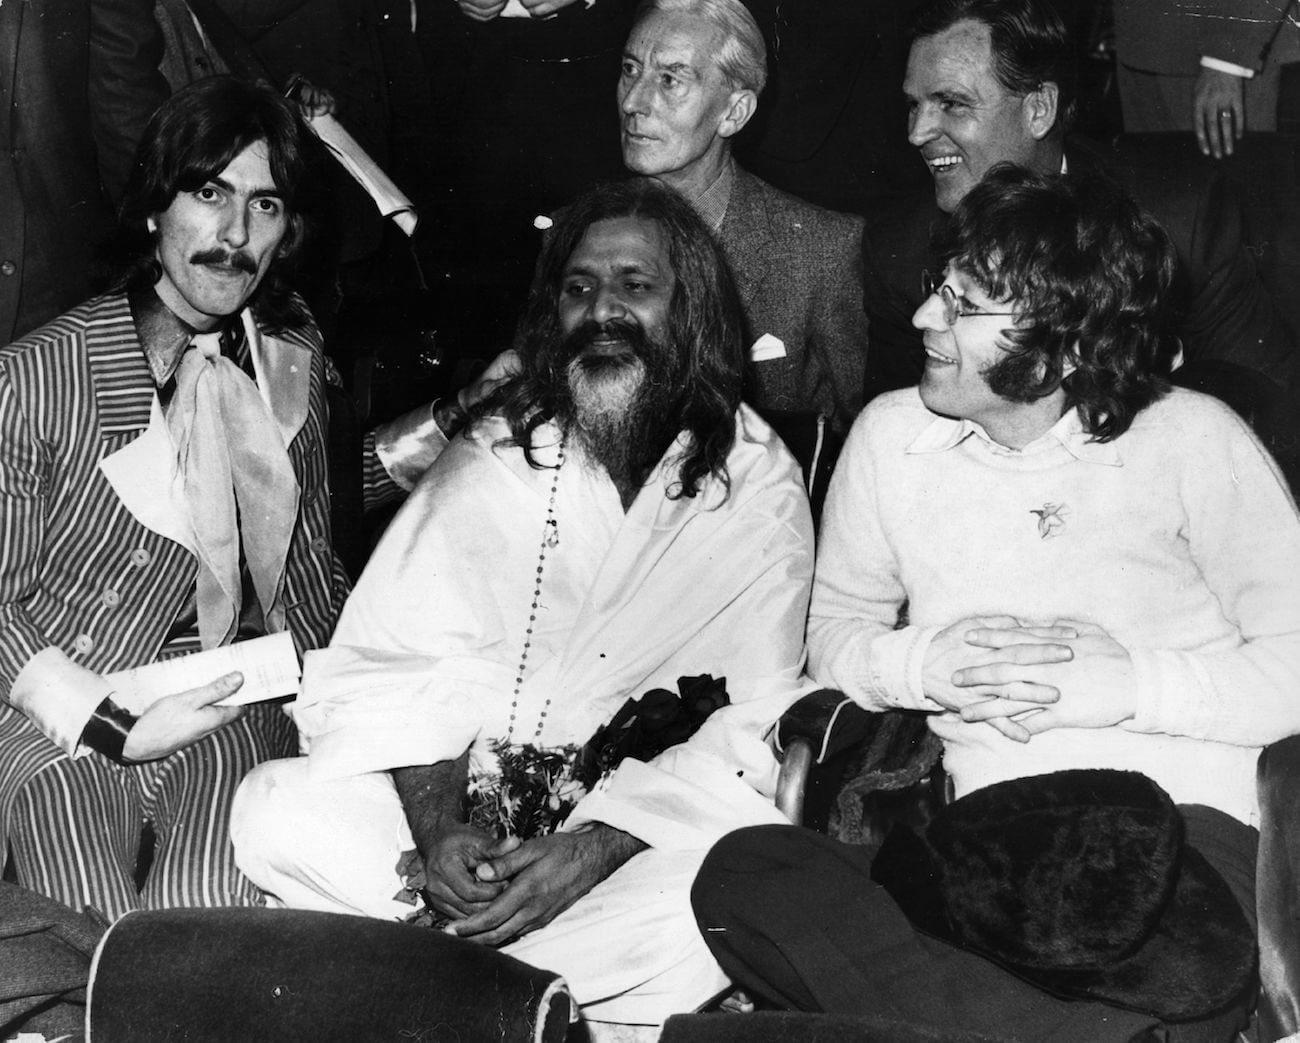 John Lennon, George Harrison, and Maharishi Mahesh Yogi at a UNICEF gala in Paris in 1967.